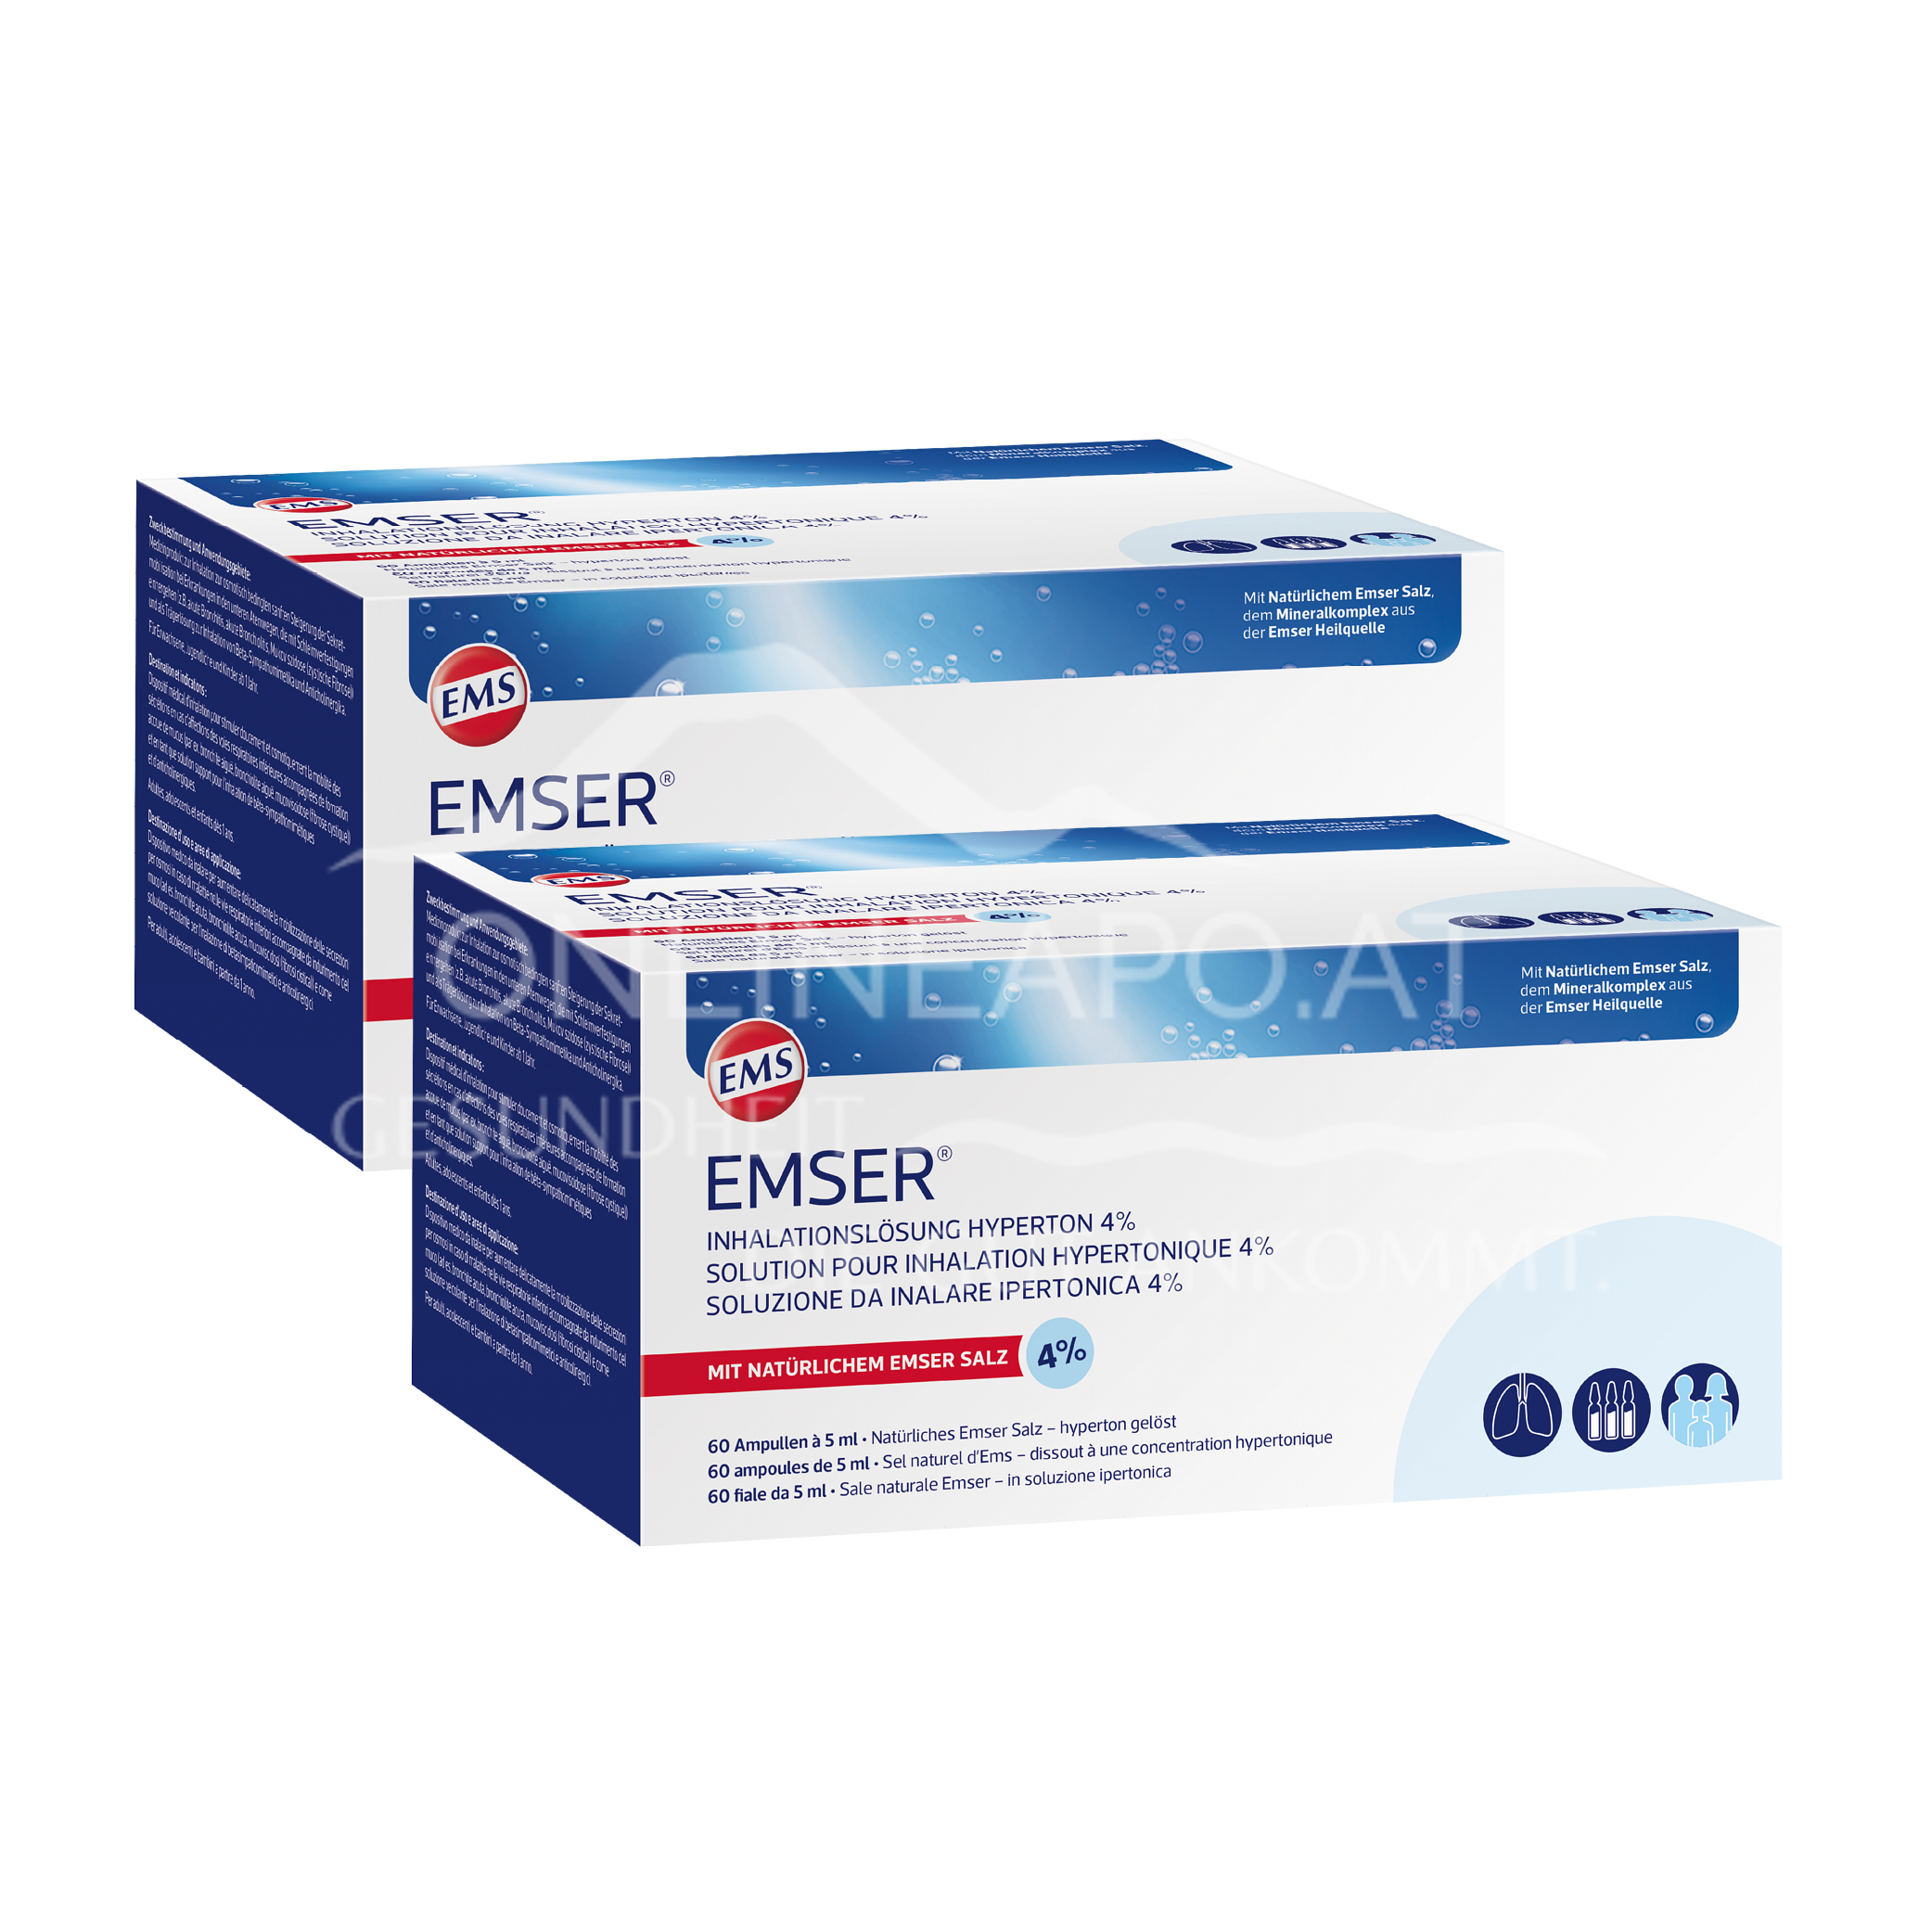 Emser® Inhalationslösung hyperton 4% Ampullen